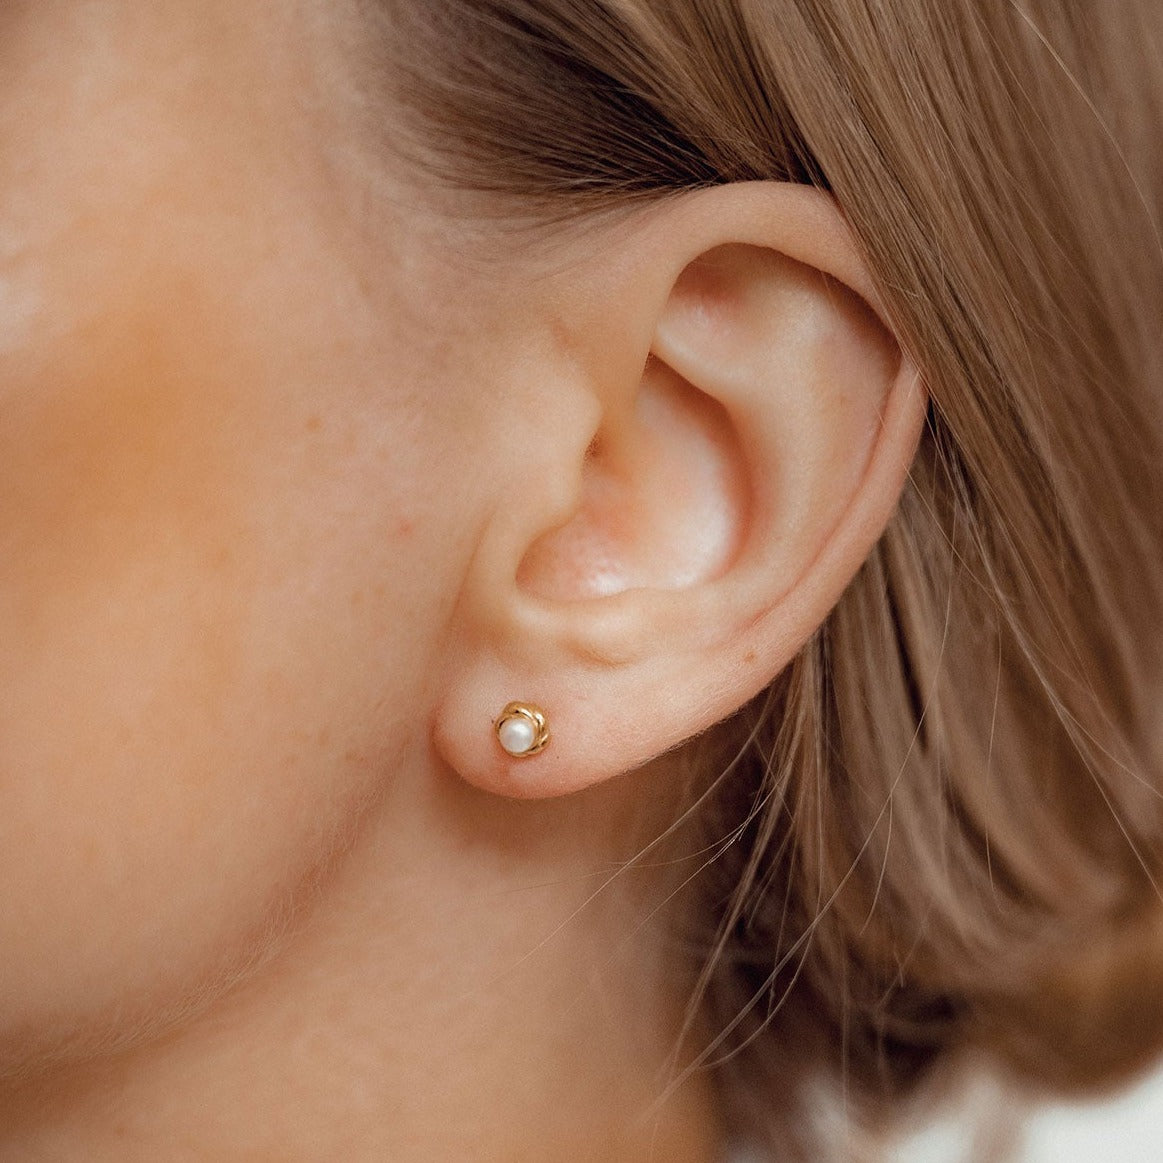 Pearl Petal Stud Earrings Sterling Silver Gold